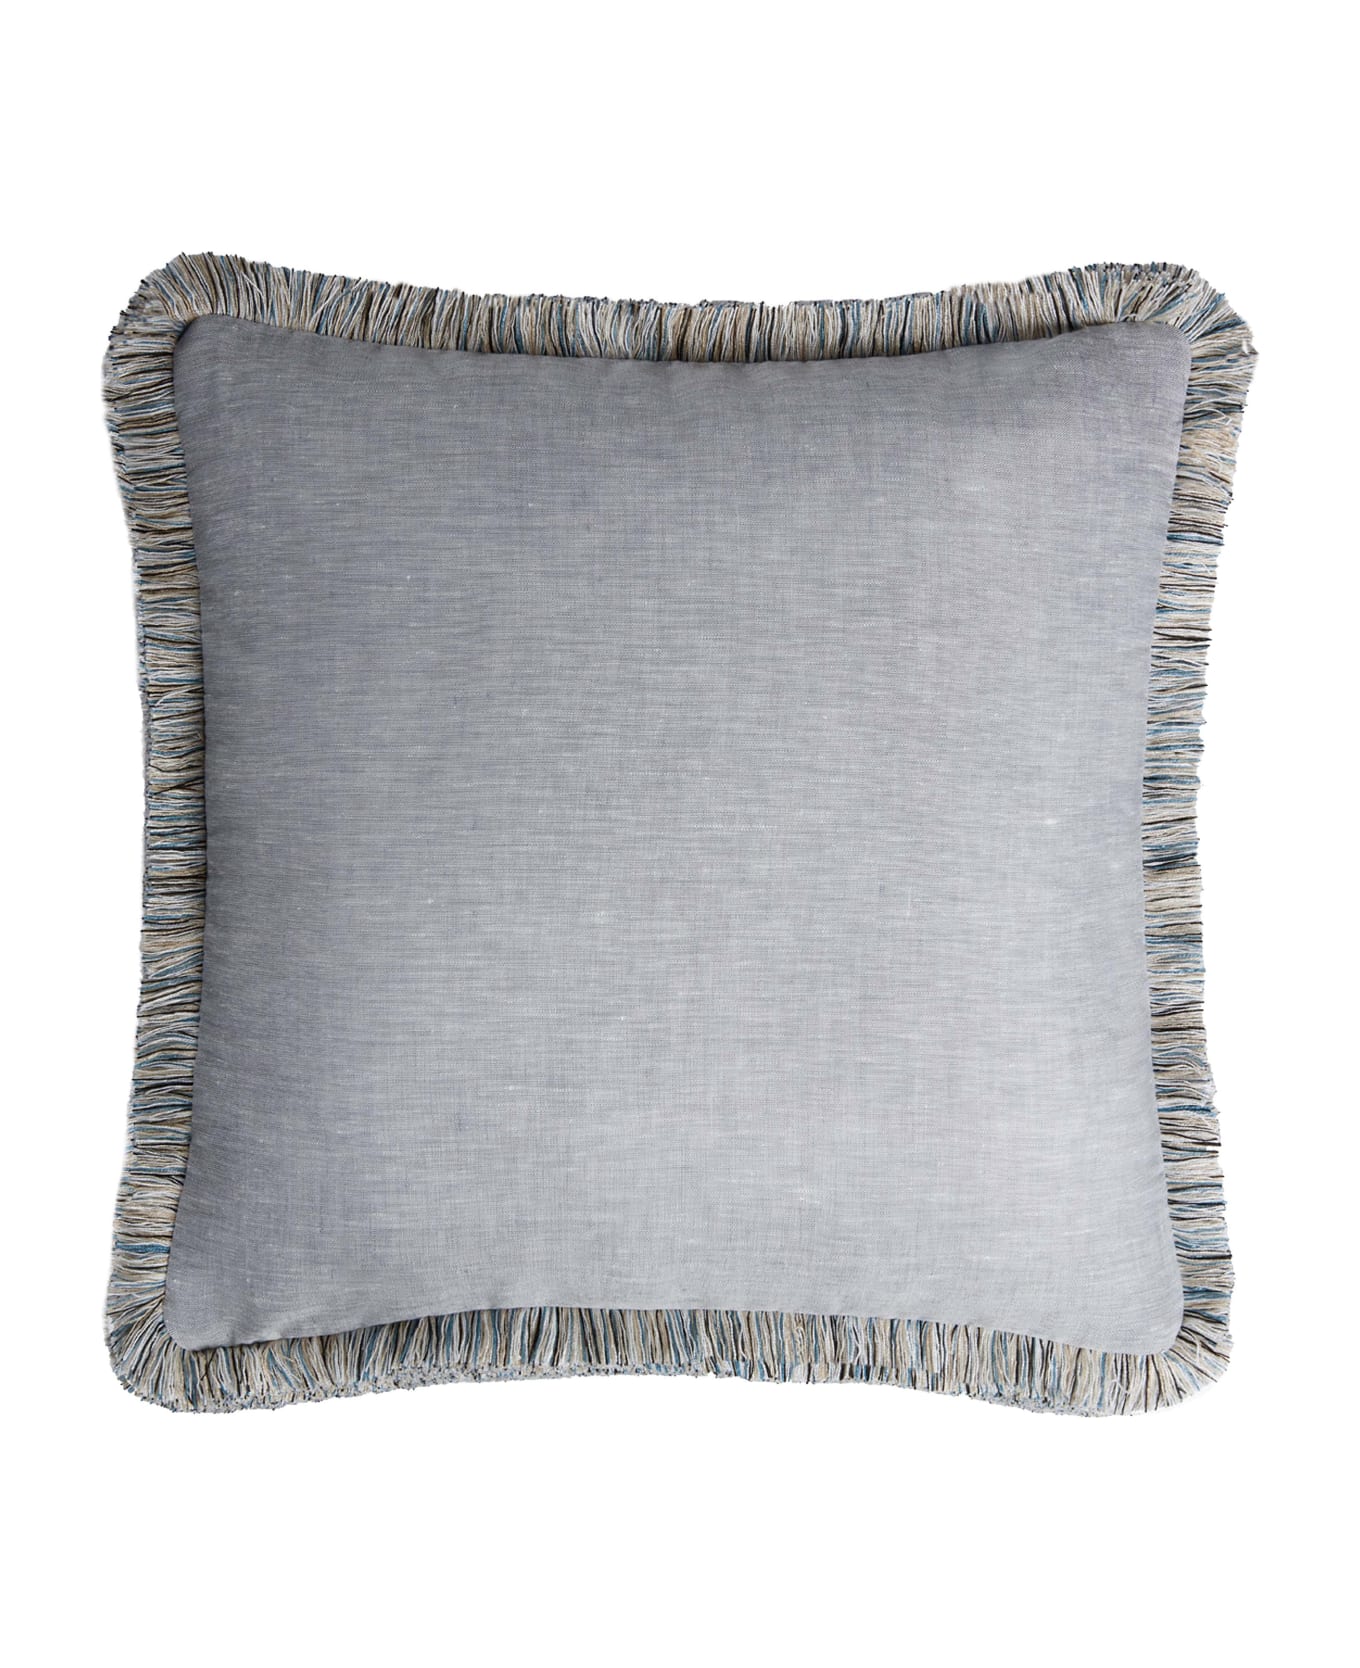 Lo Decor Capri Linen Pillow - Light Grey - Multicolor Fringes クッション